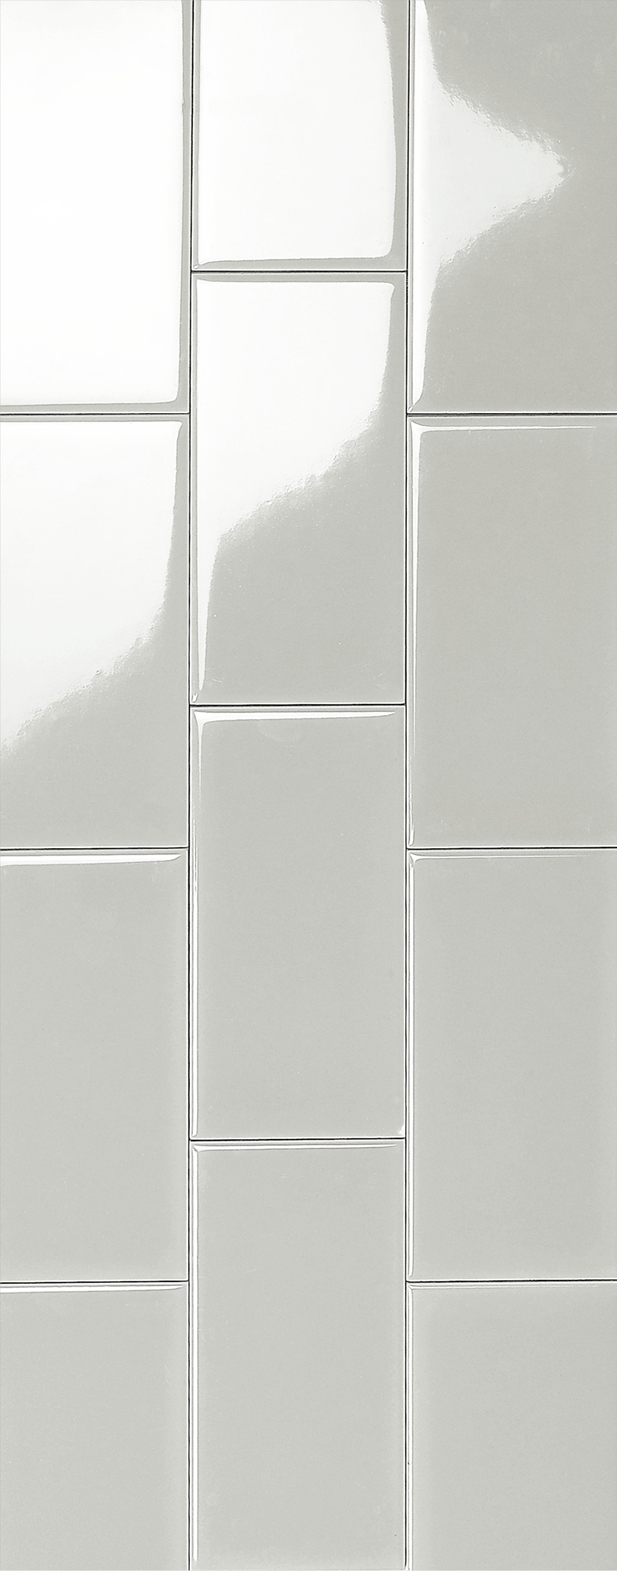 CBM white kitchen wall tiles factory price for villa-1